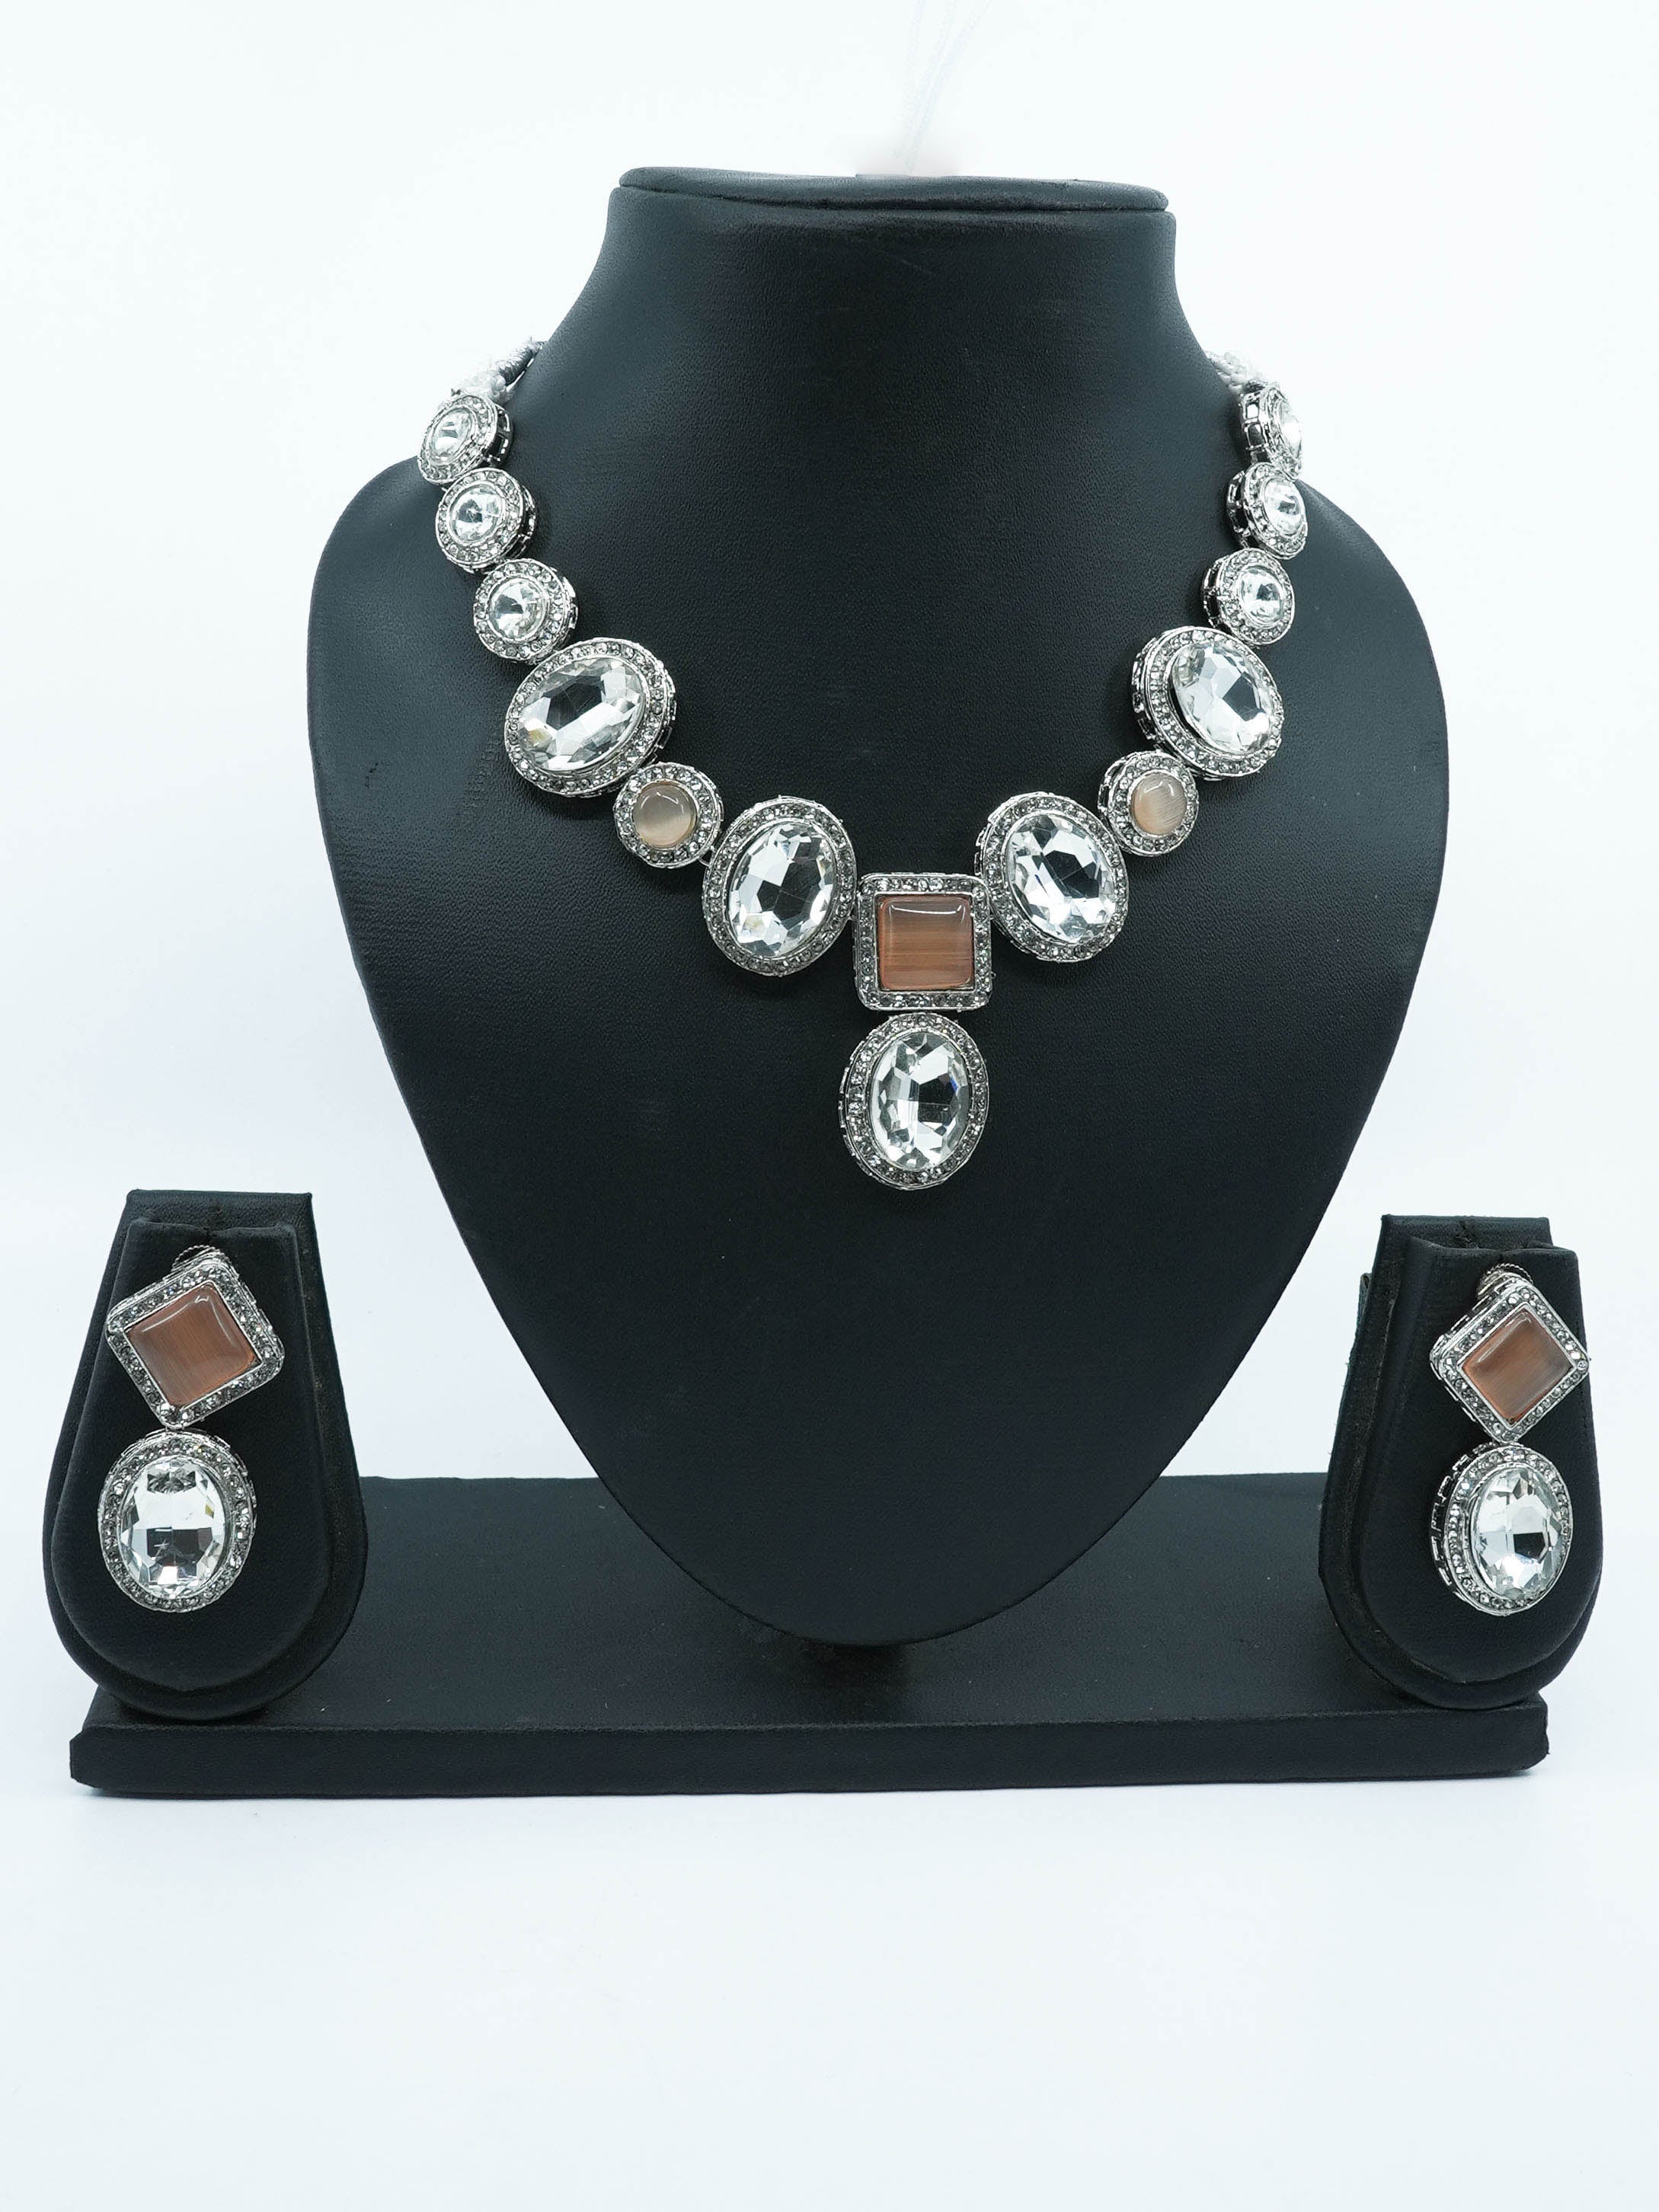 Designer Monalisa colored stones Necklace set 10982N